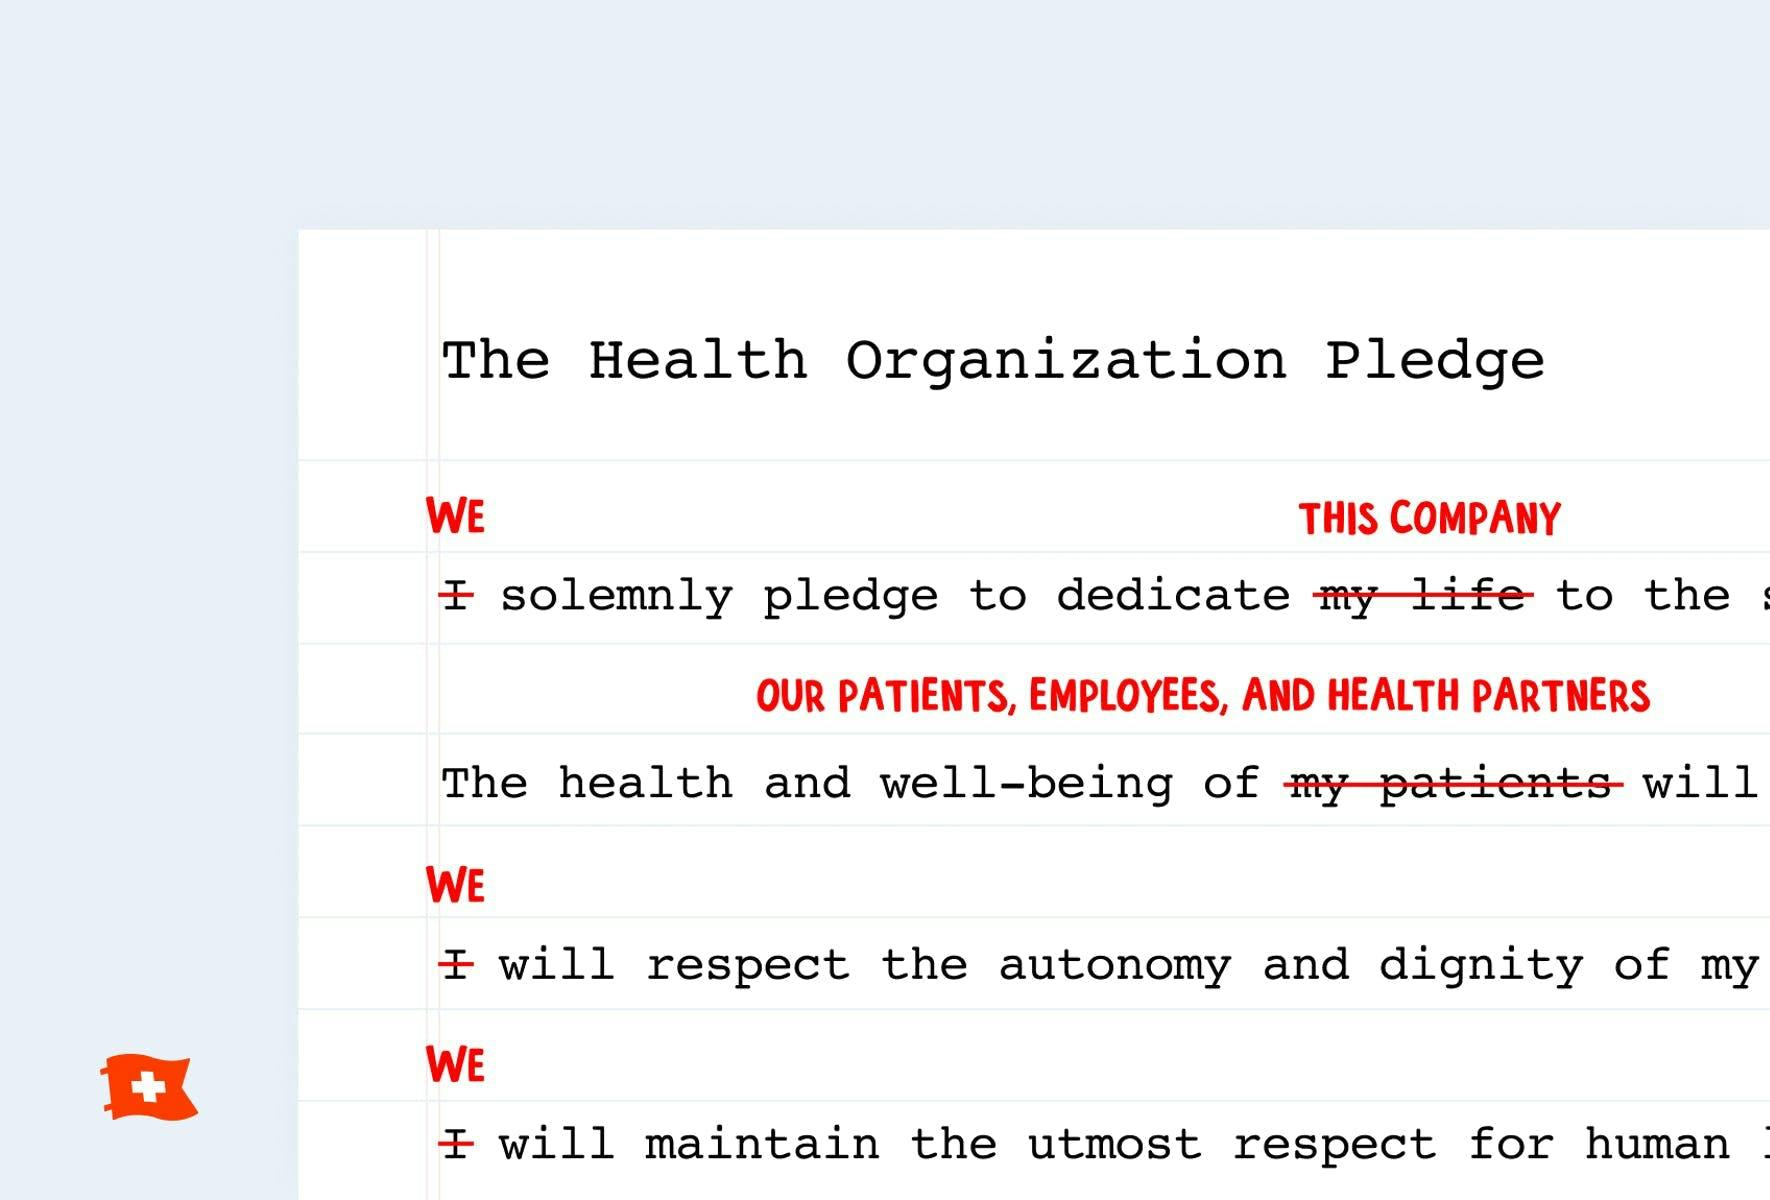 The Health Organization Pledge